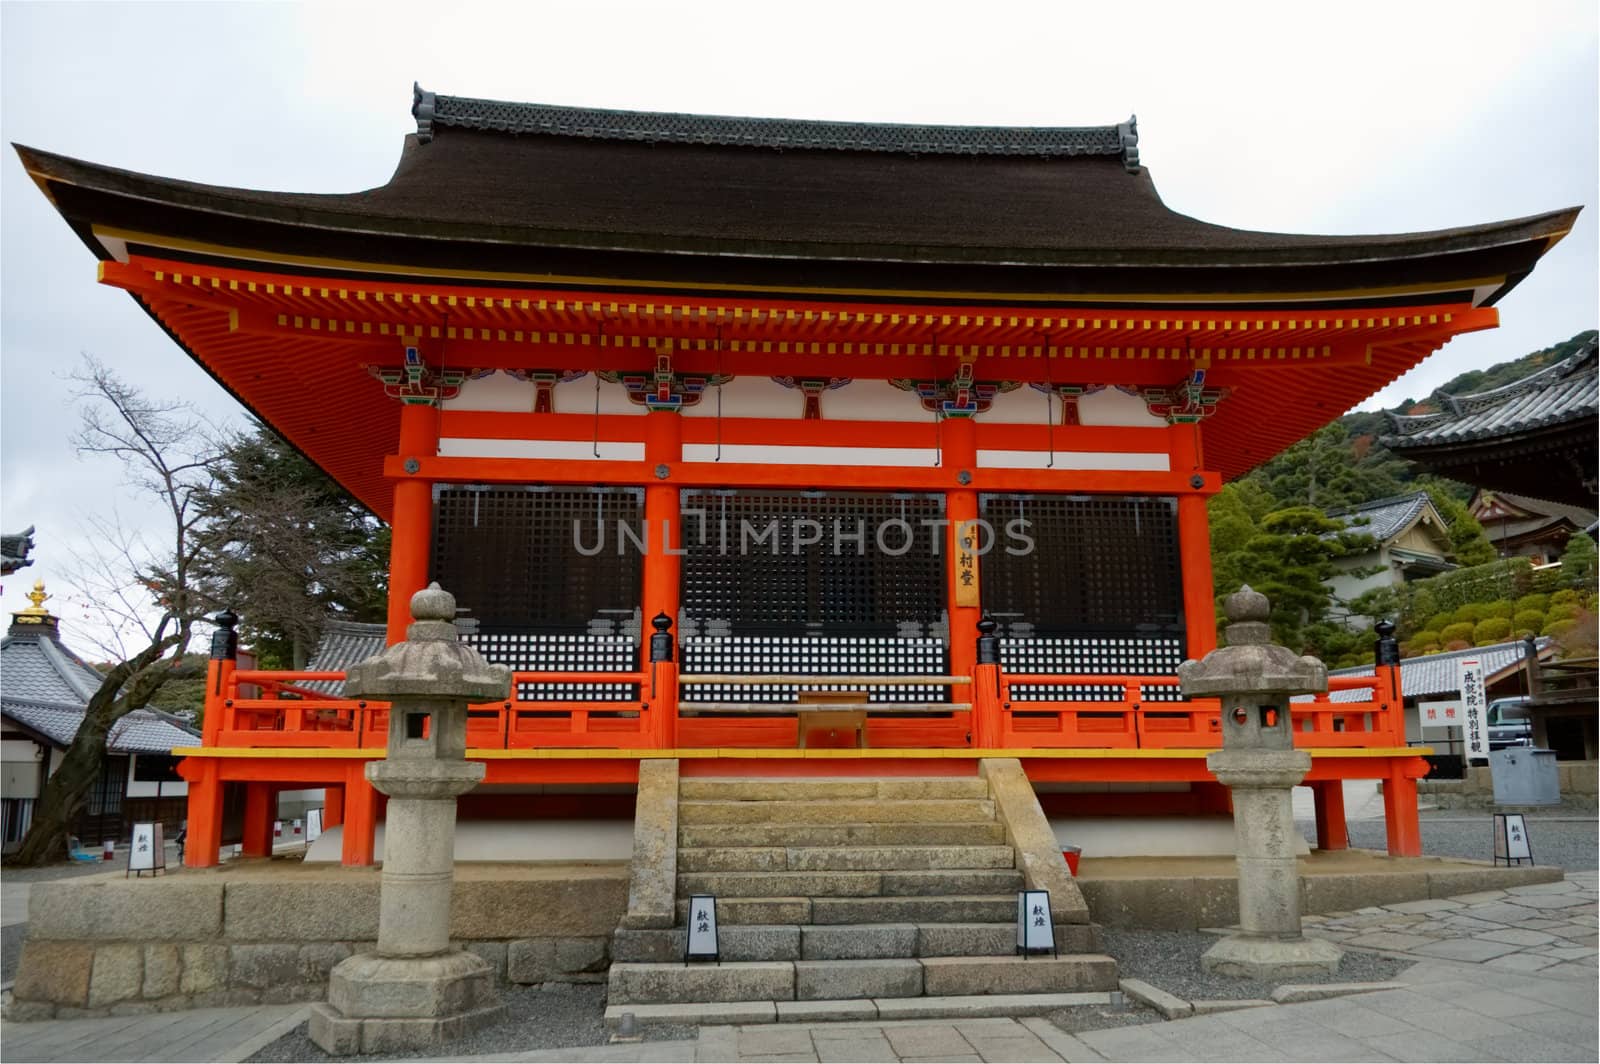 The temple of Kiyomizu dera in Kyoto, Japan